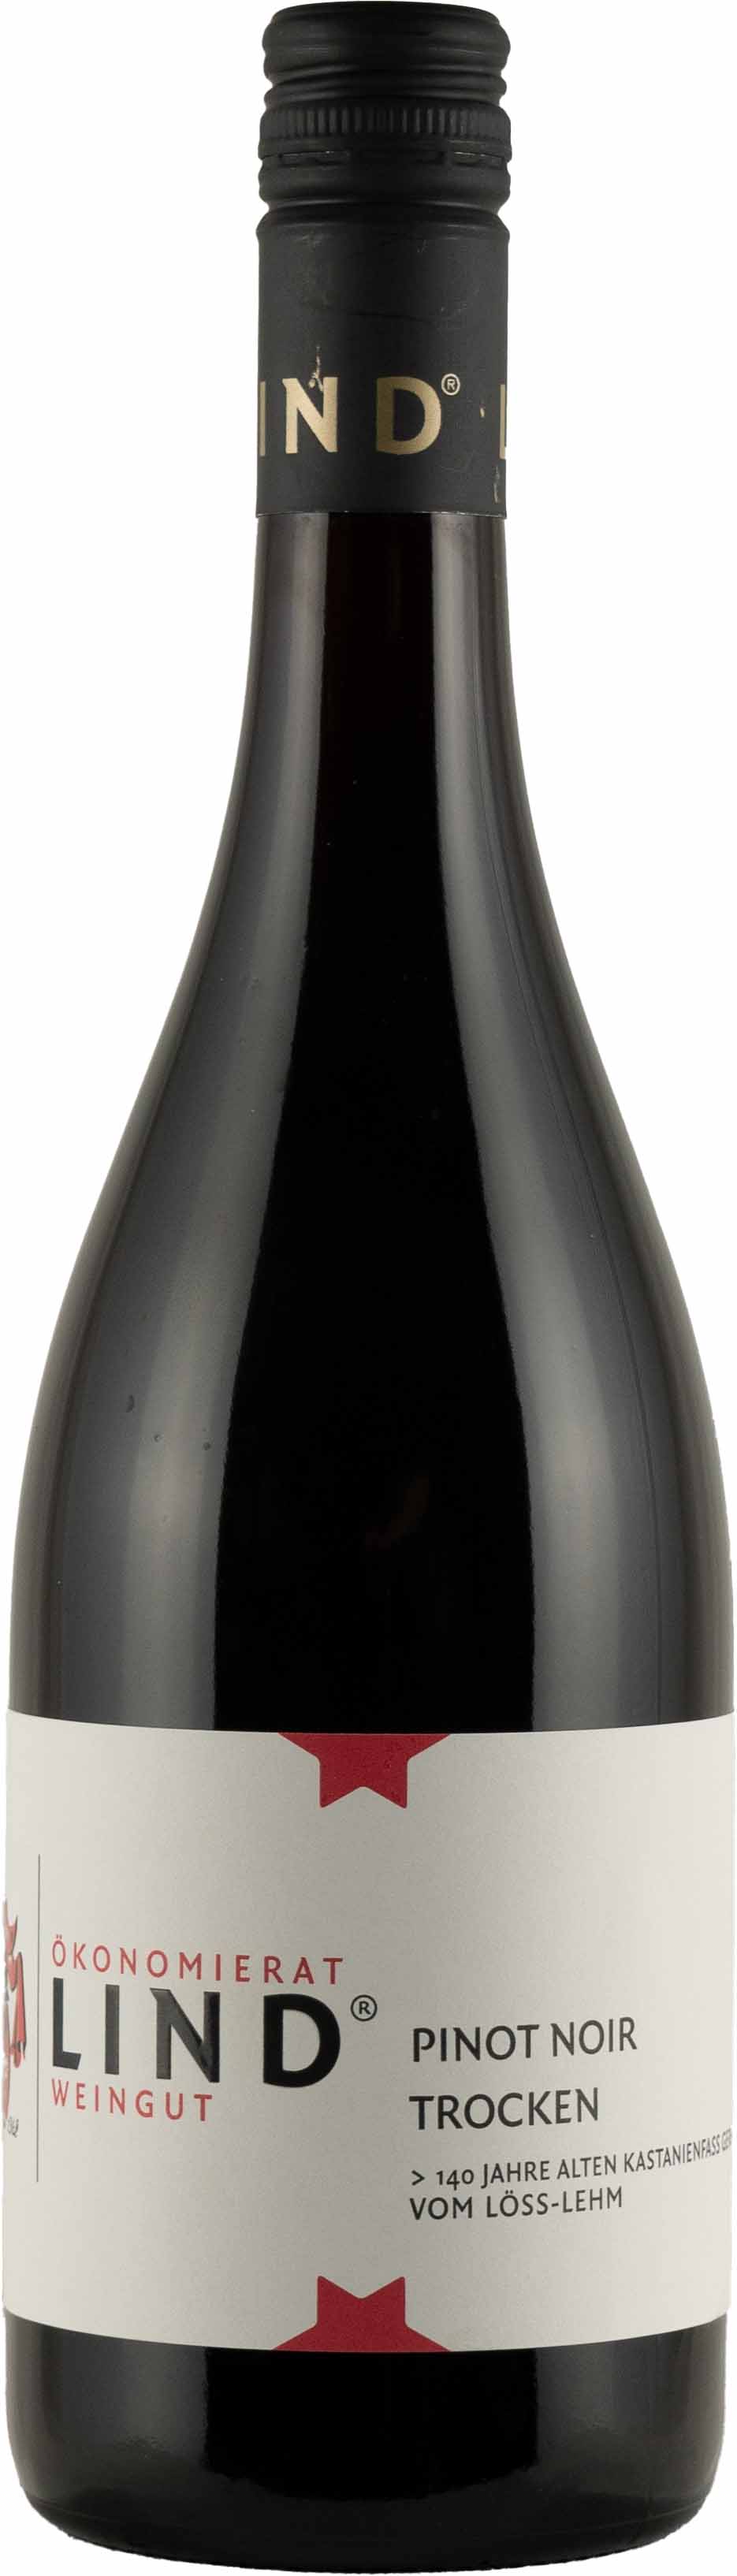 2020 Pinot Noir trocken Mandelpfad 0,75 L - Weingut Ökonomierat Lind